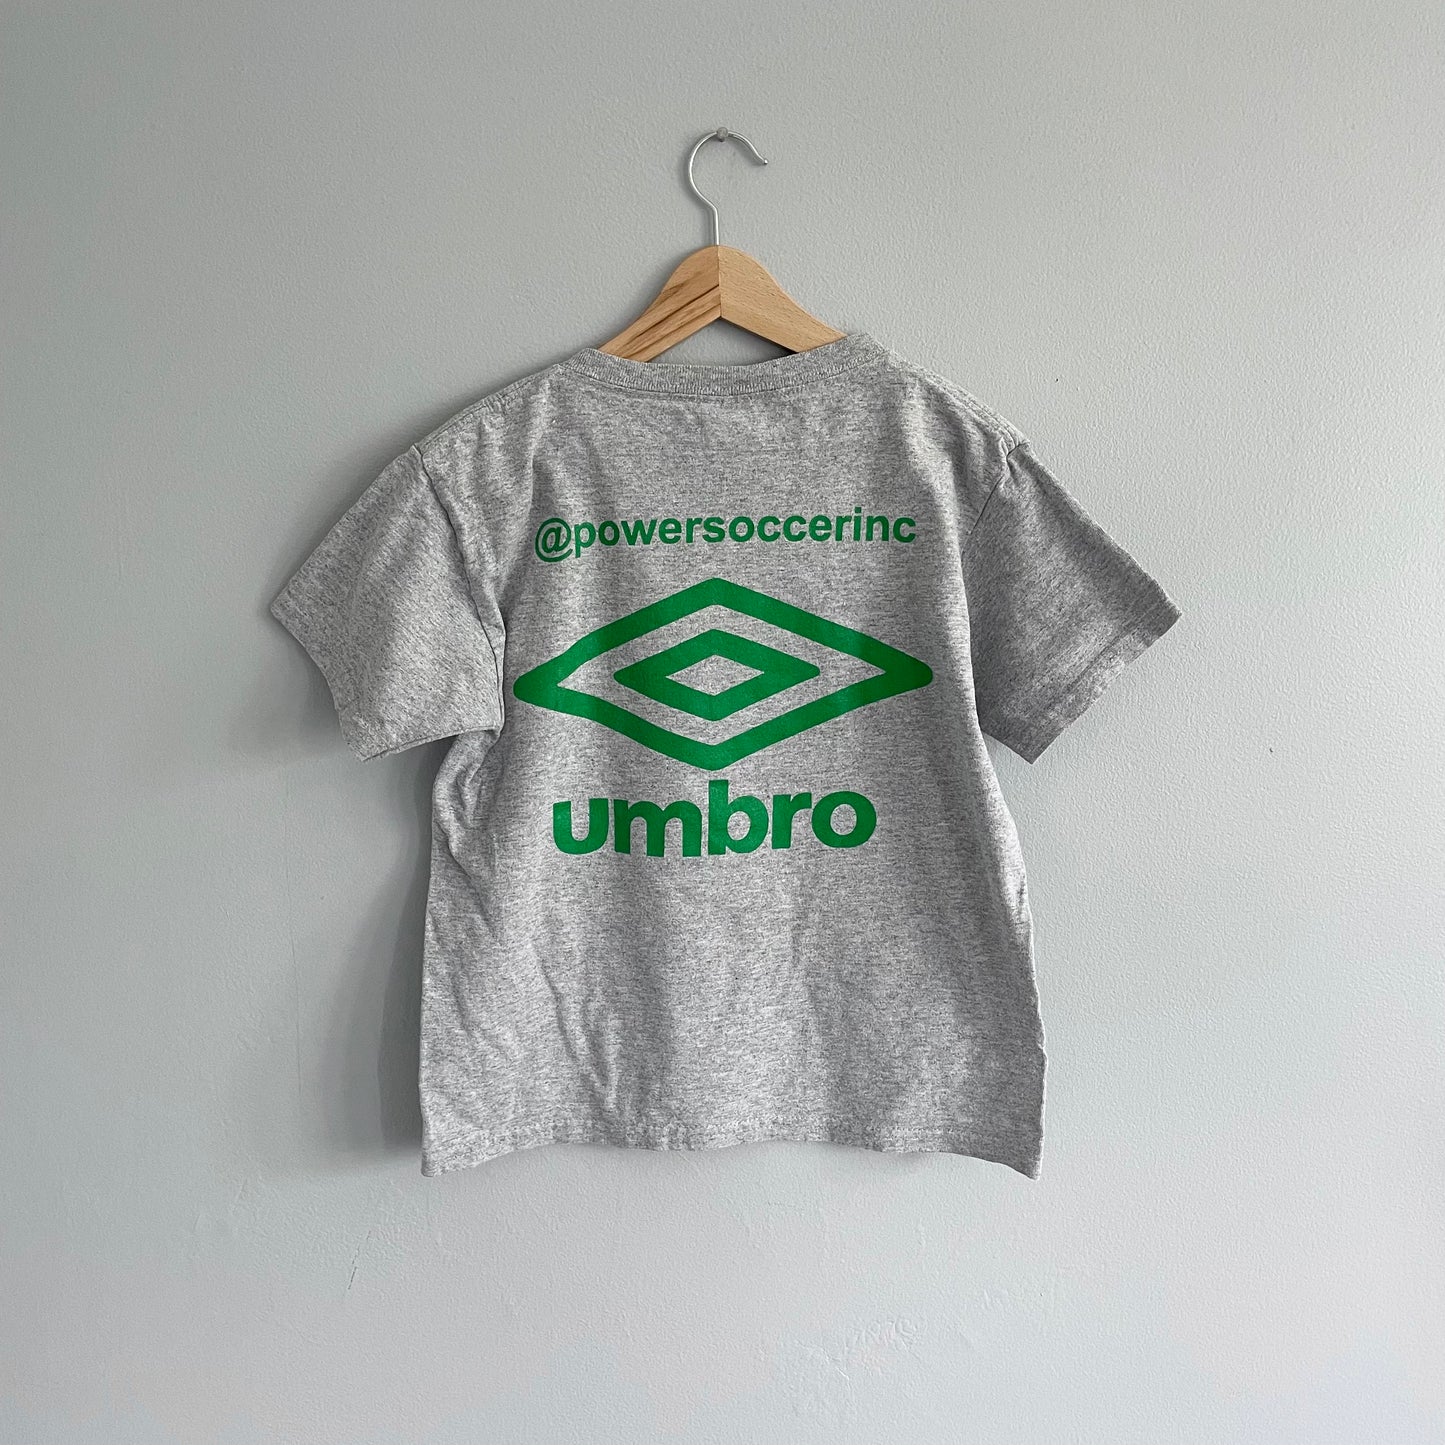 No brand / Soccer t-shirt / 8-9Y